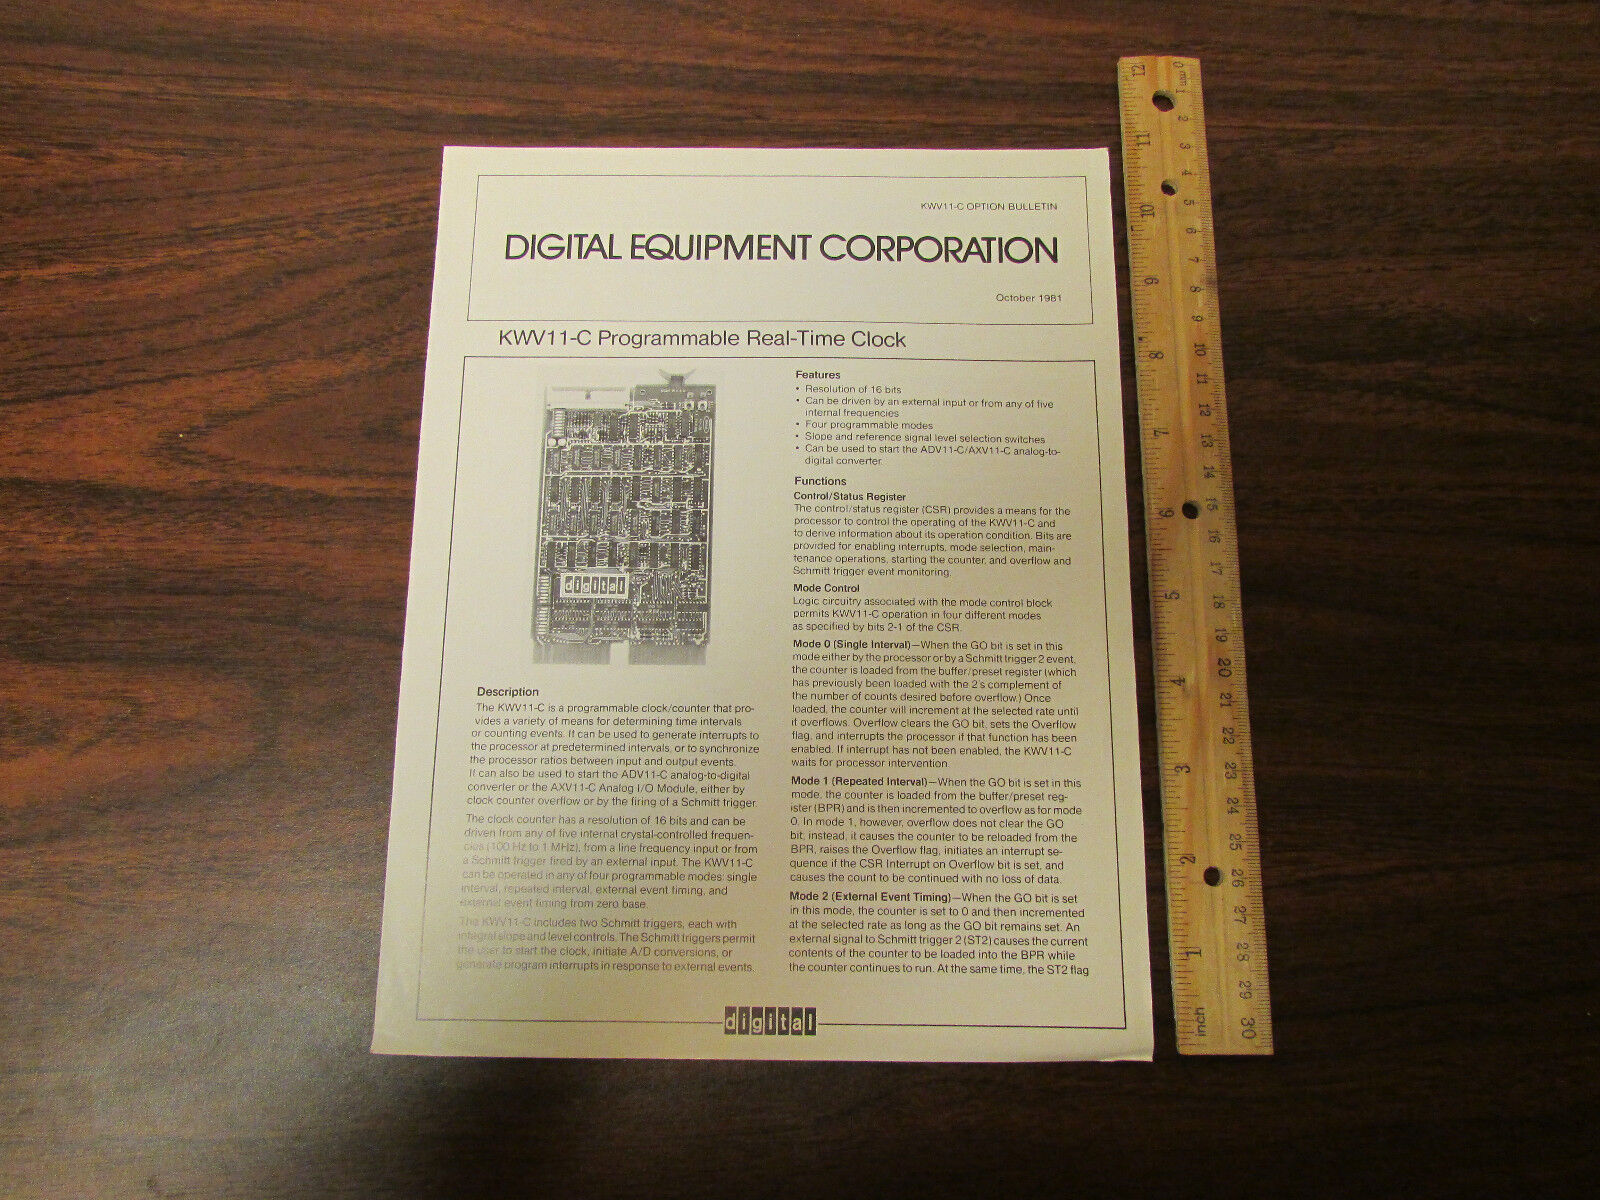 Vintage DEC PDP11 Option Bulletin KX11-C Real-Time Clock 1981